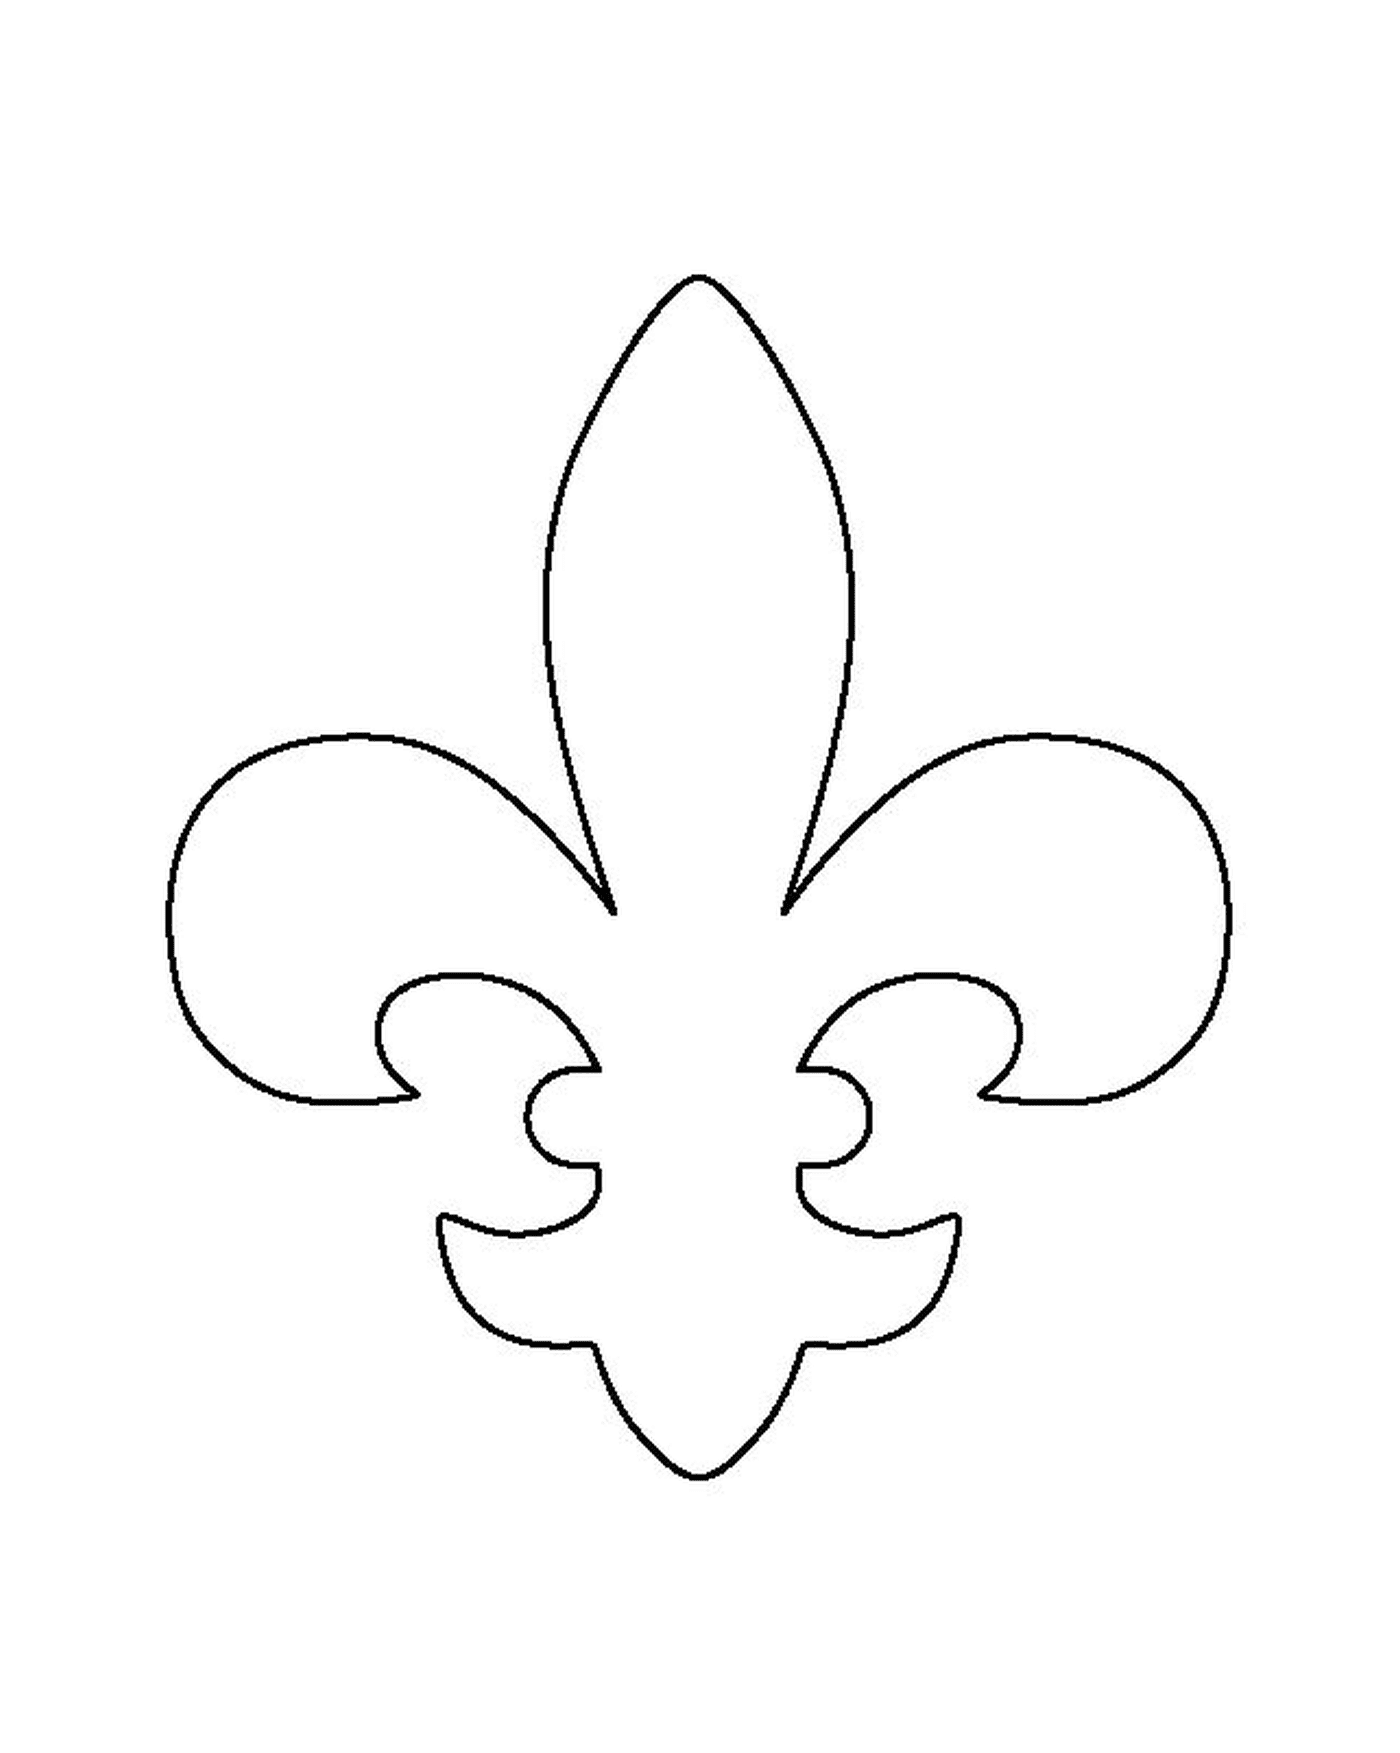  A lily flower pattern 